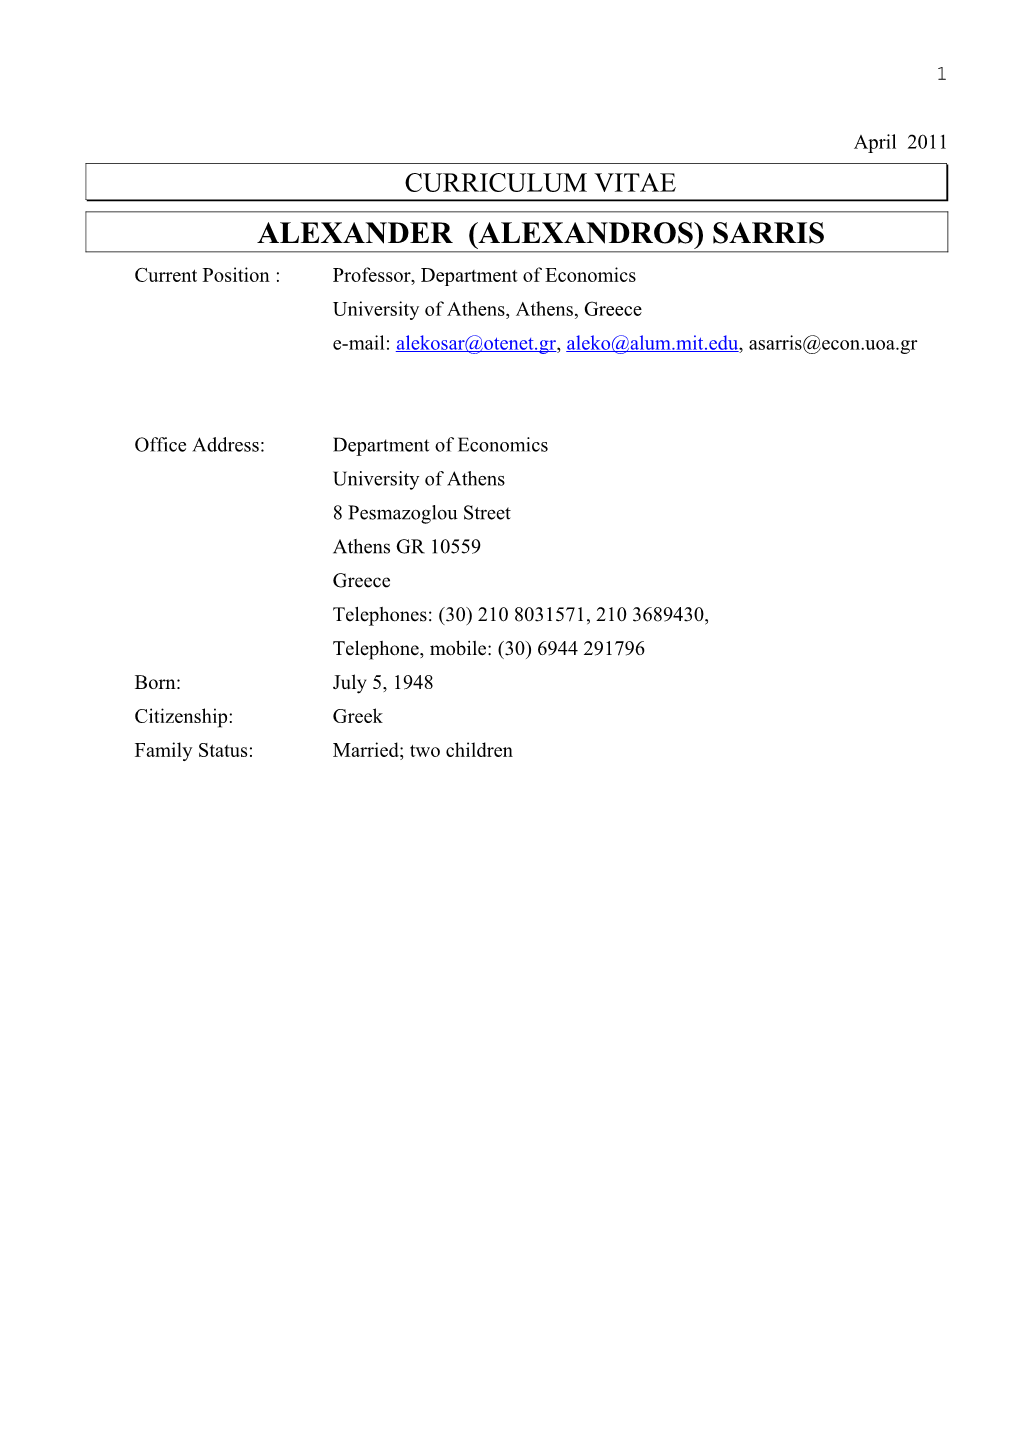 Alexander (Alexandros) Sarris